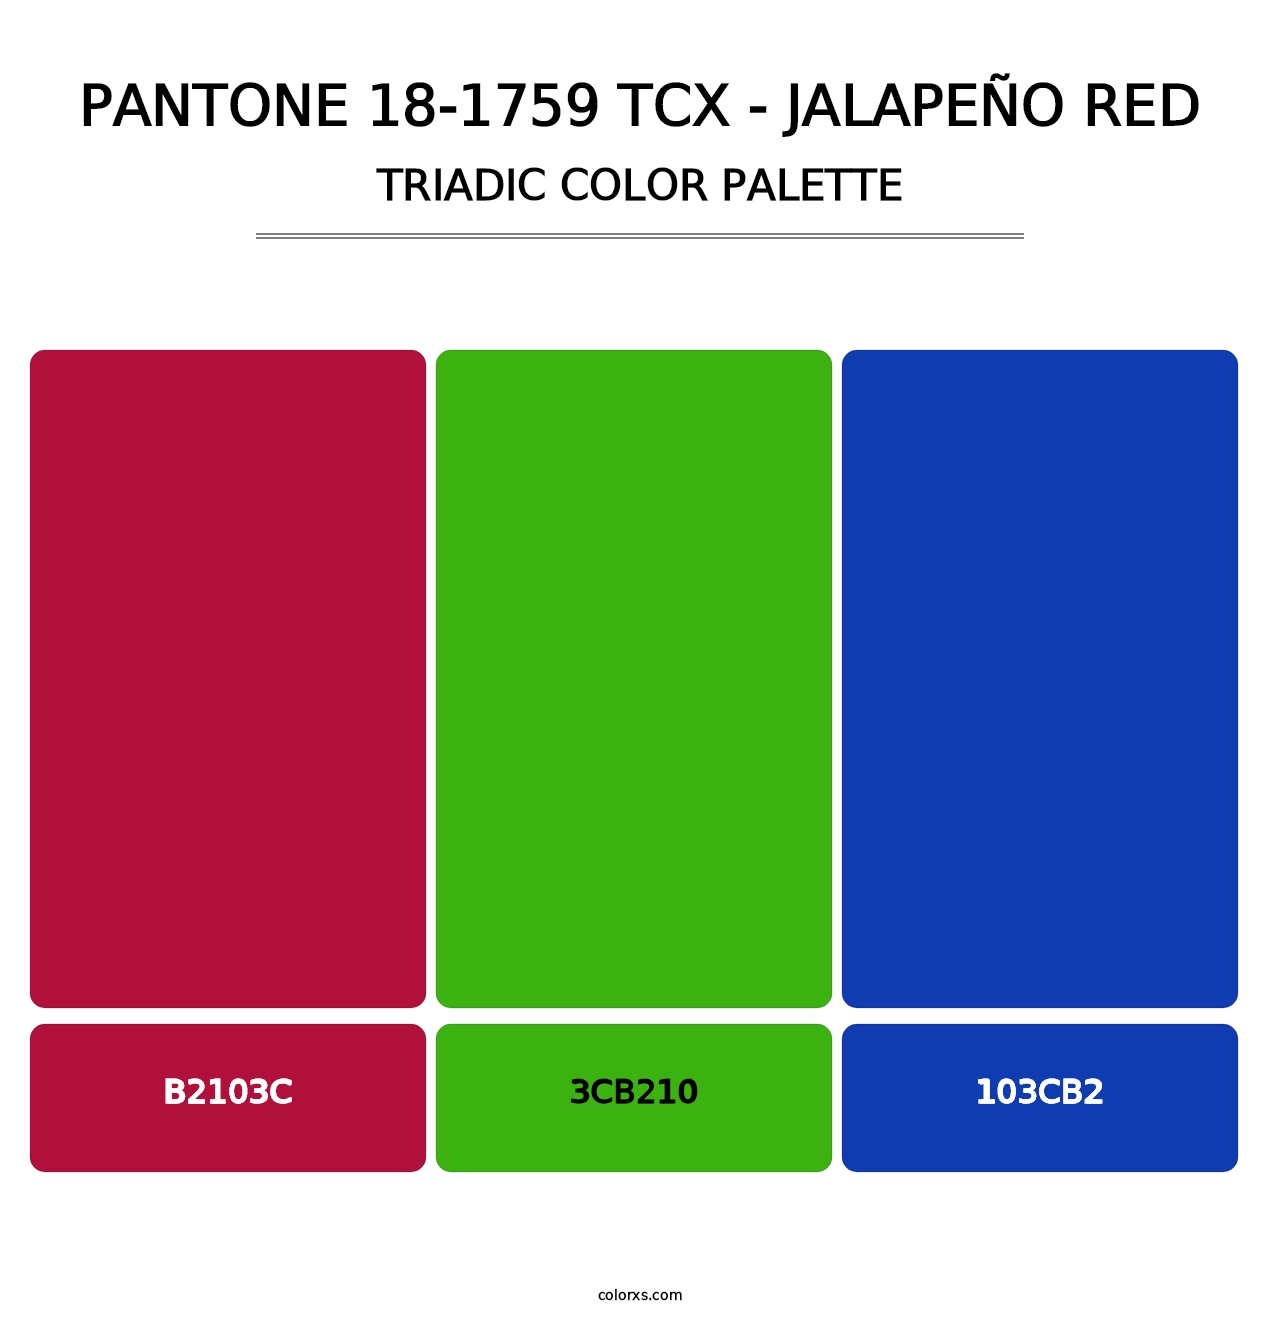 PANTONE 18-1759 TCX - Jalapeño Red - Triadic Color Palette